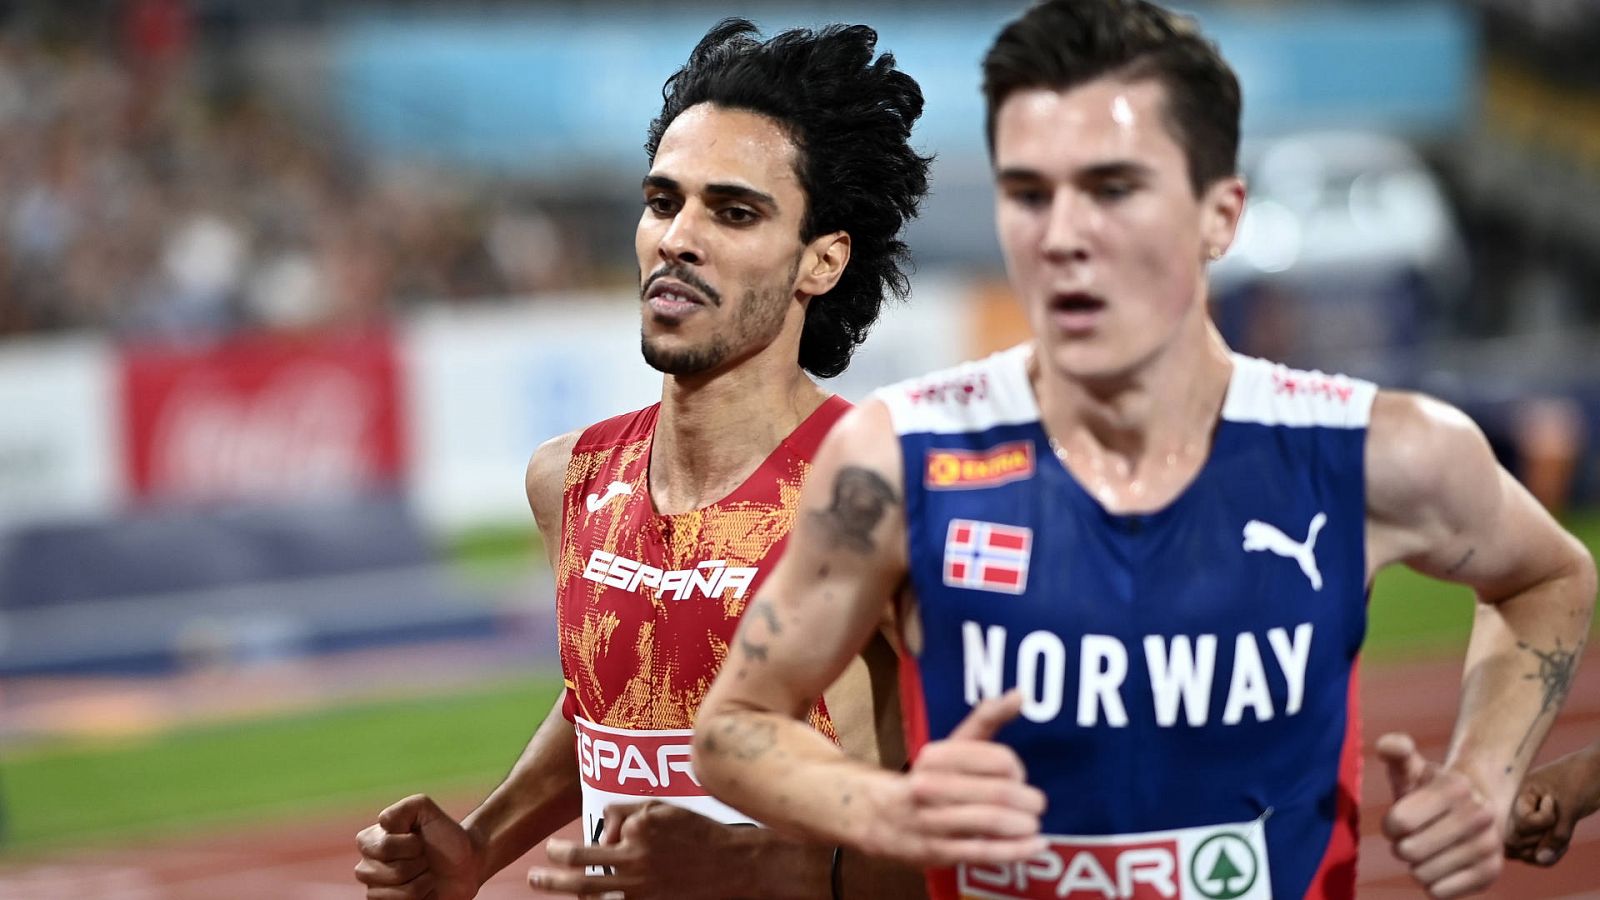 Mohamed Katir, plata en los 5.000 m del Europeo de Múnich